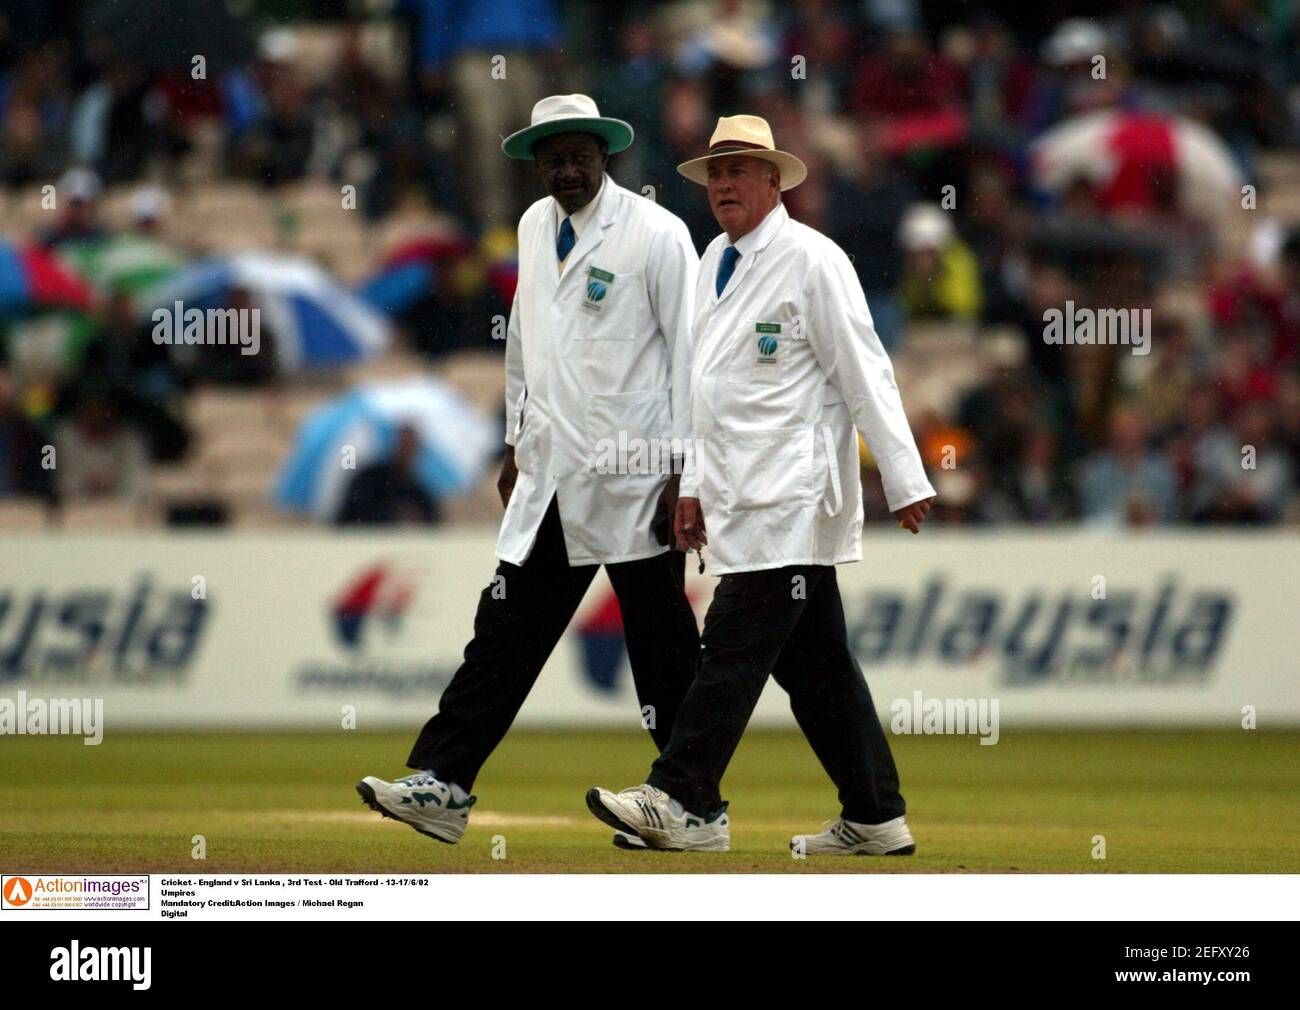 Cricket - England v Sri Lanka , 3rd Test - Old Trafford - 13-17/6/02  Umpires  Mandatory Credit:Action Images / Michael Regan  Digital Stock Photo